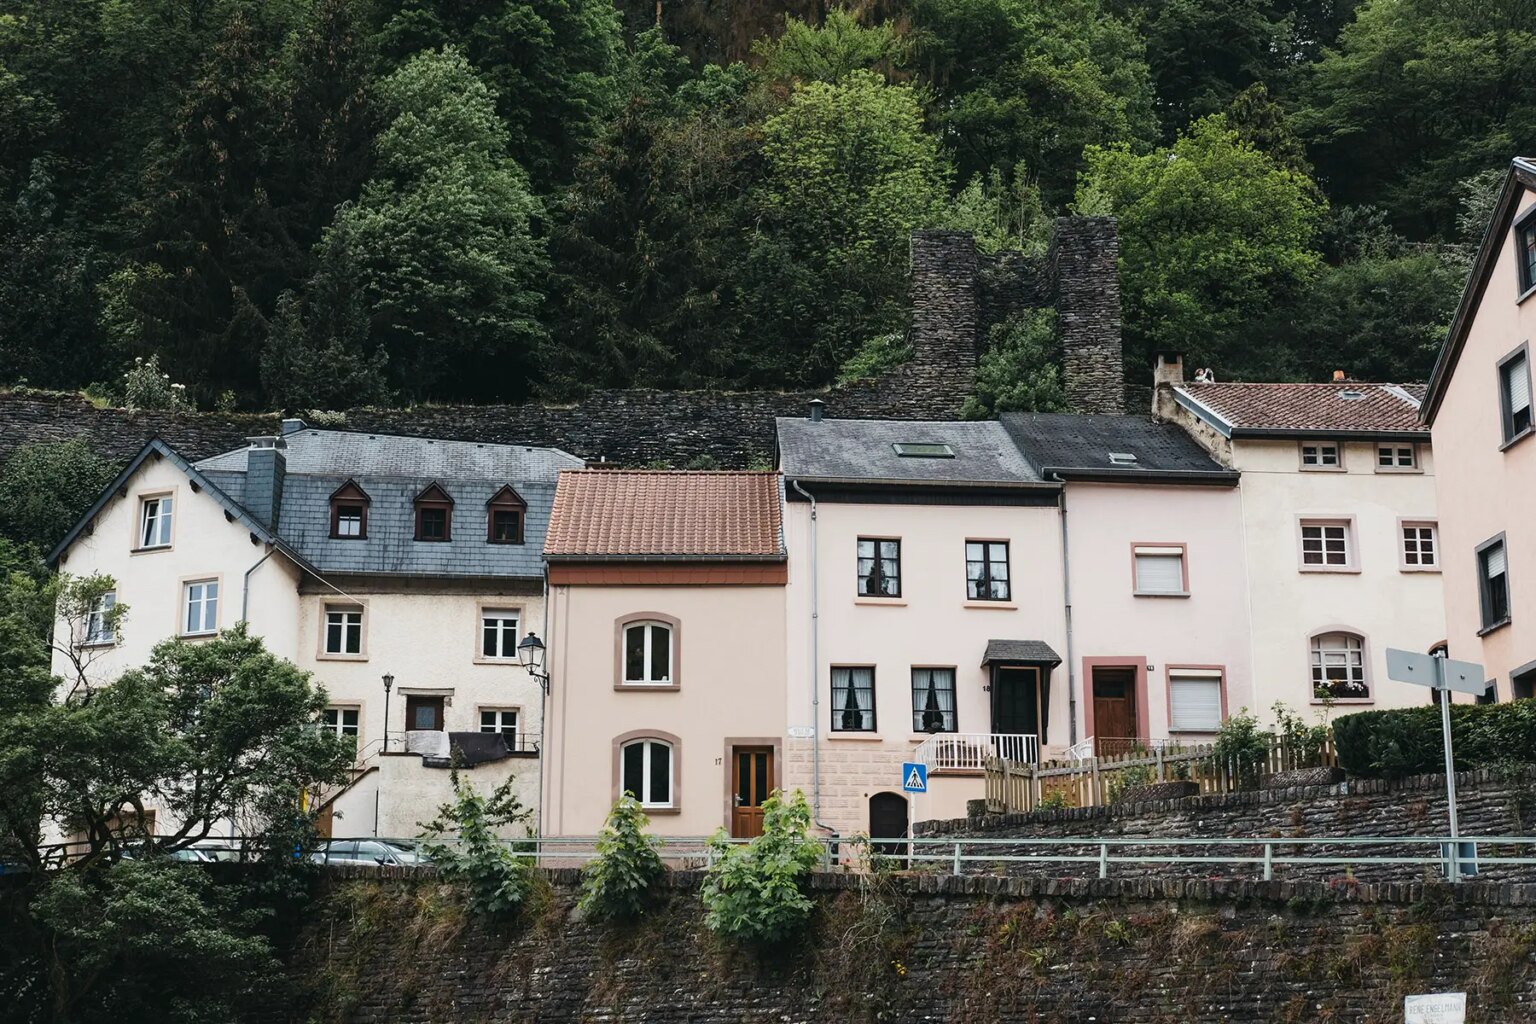 Luxembourg inheritance tax